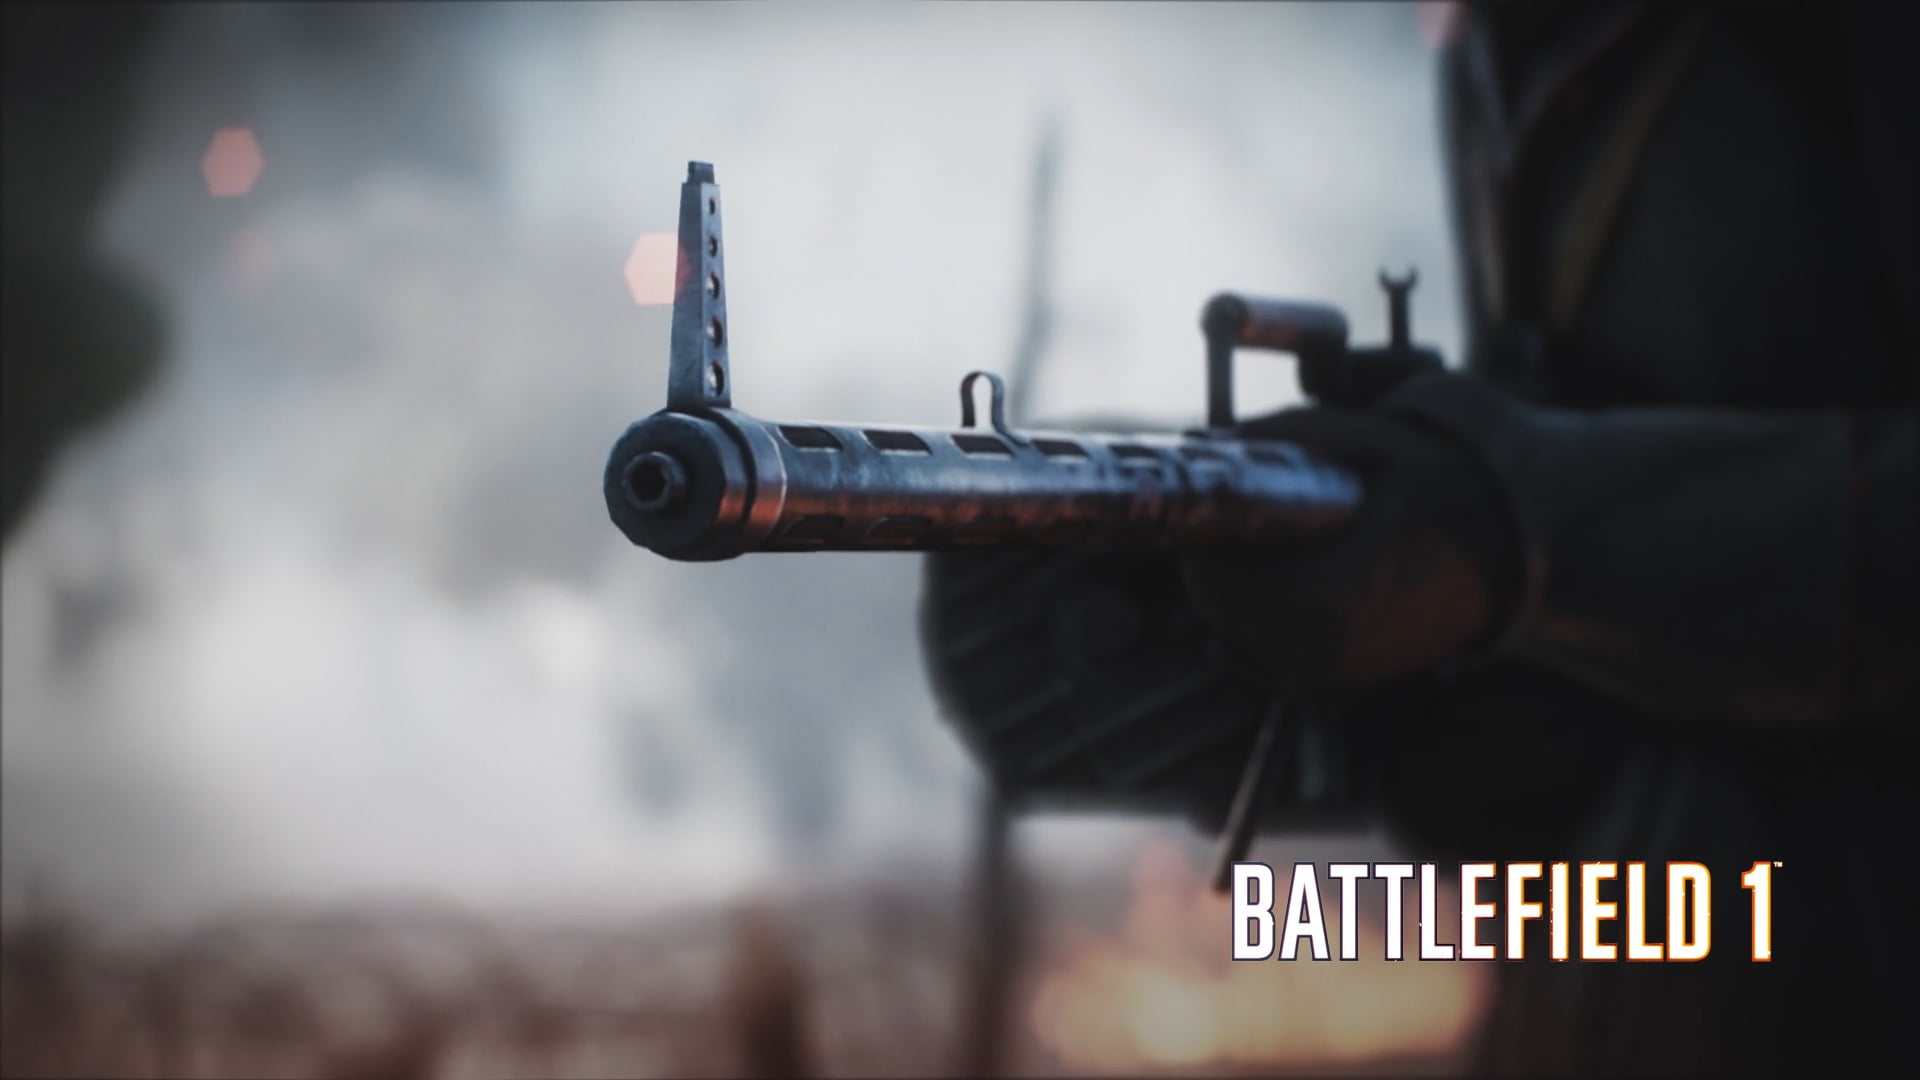 Battlefield 1 case cover, communication, sign, close-up, selective focus